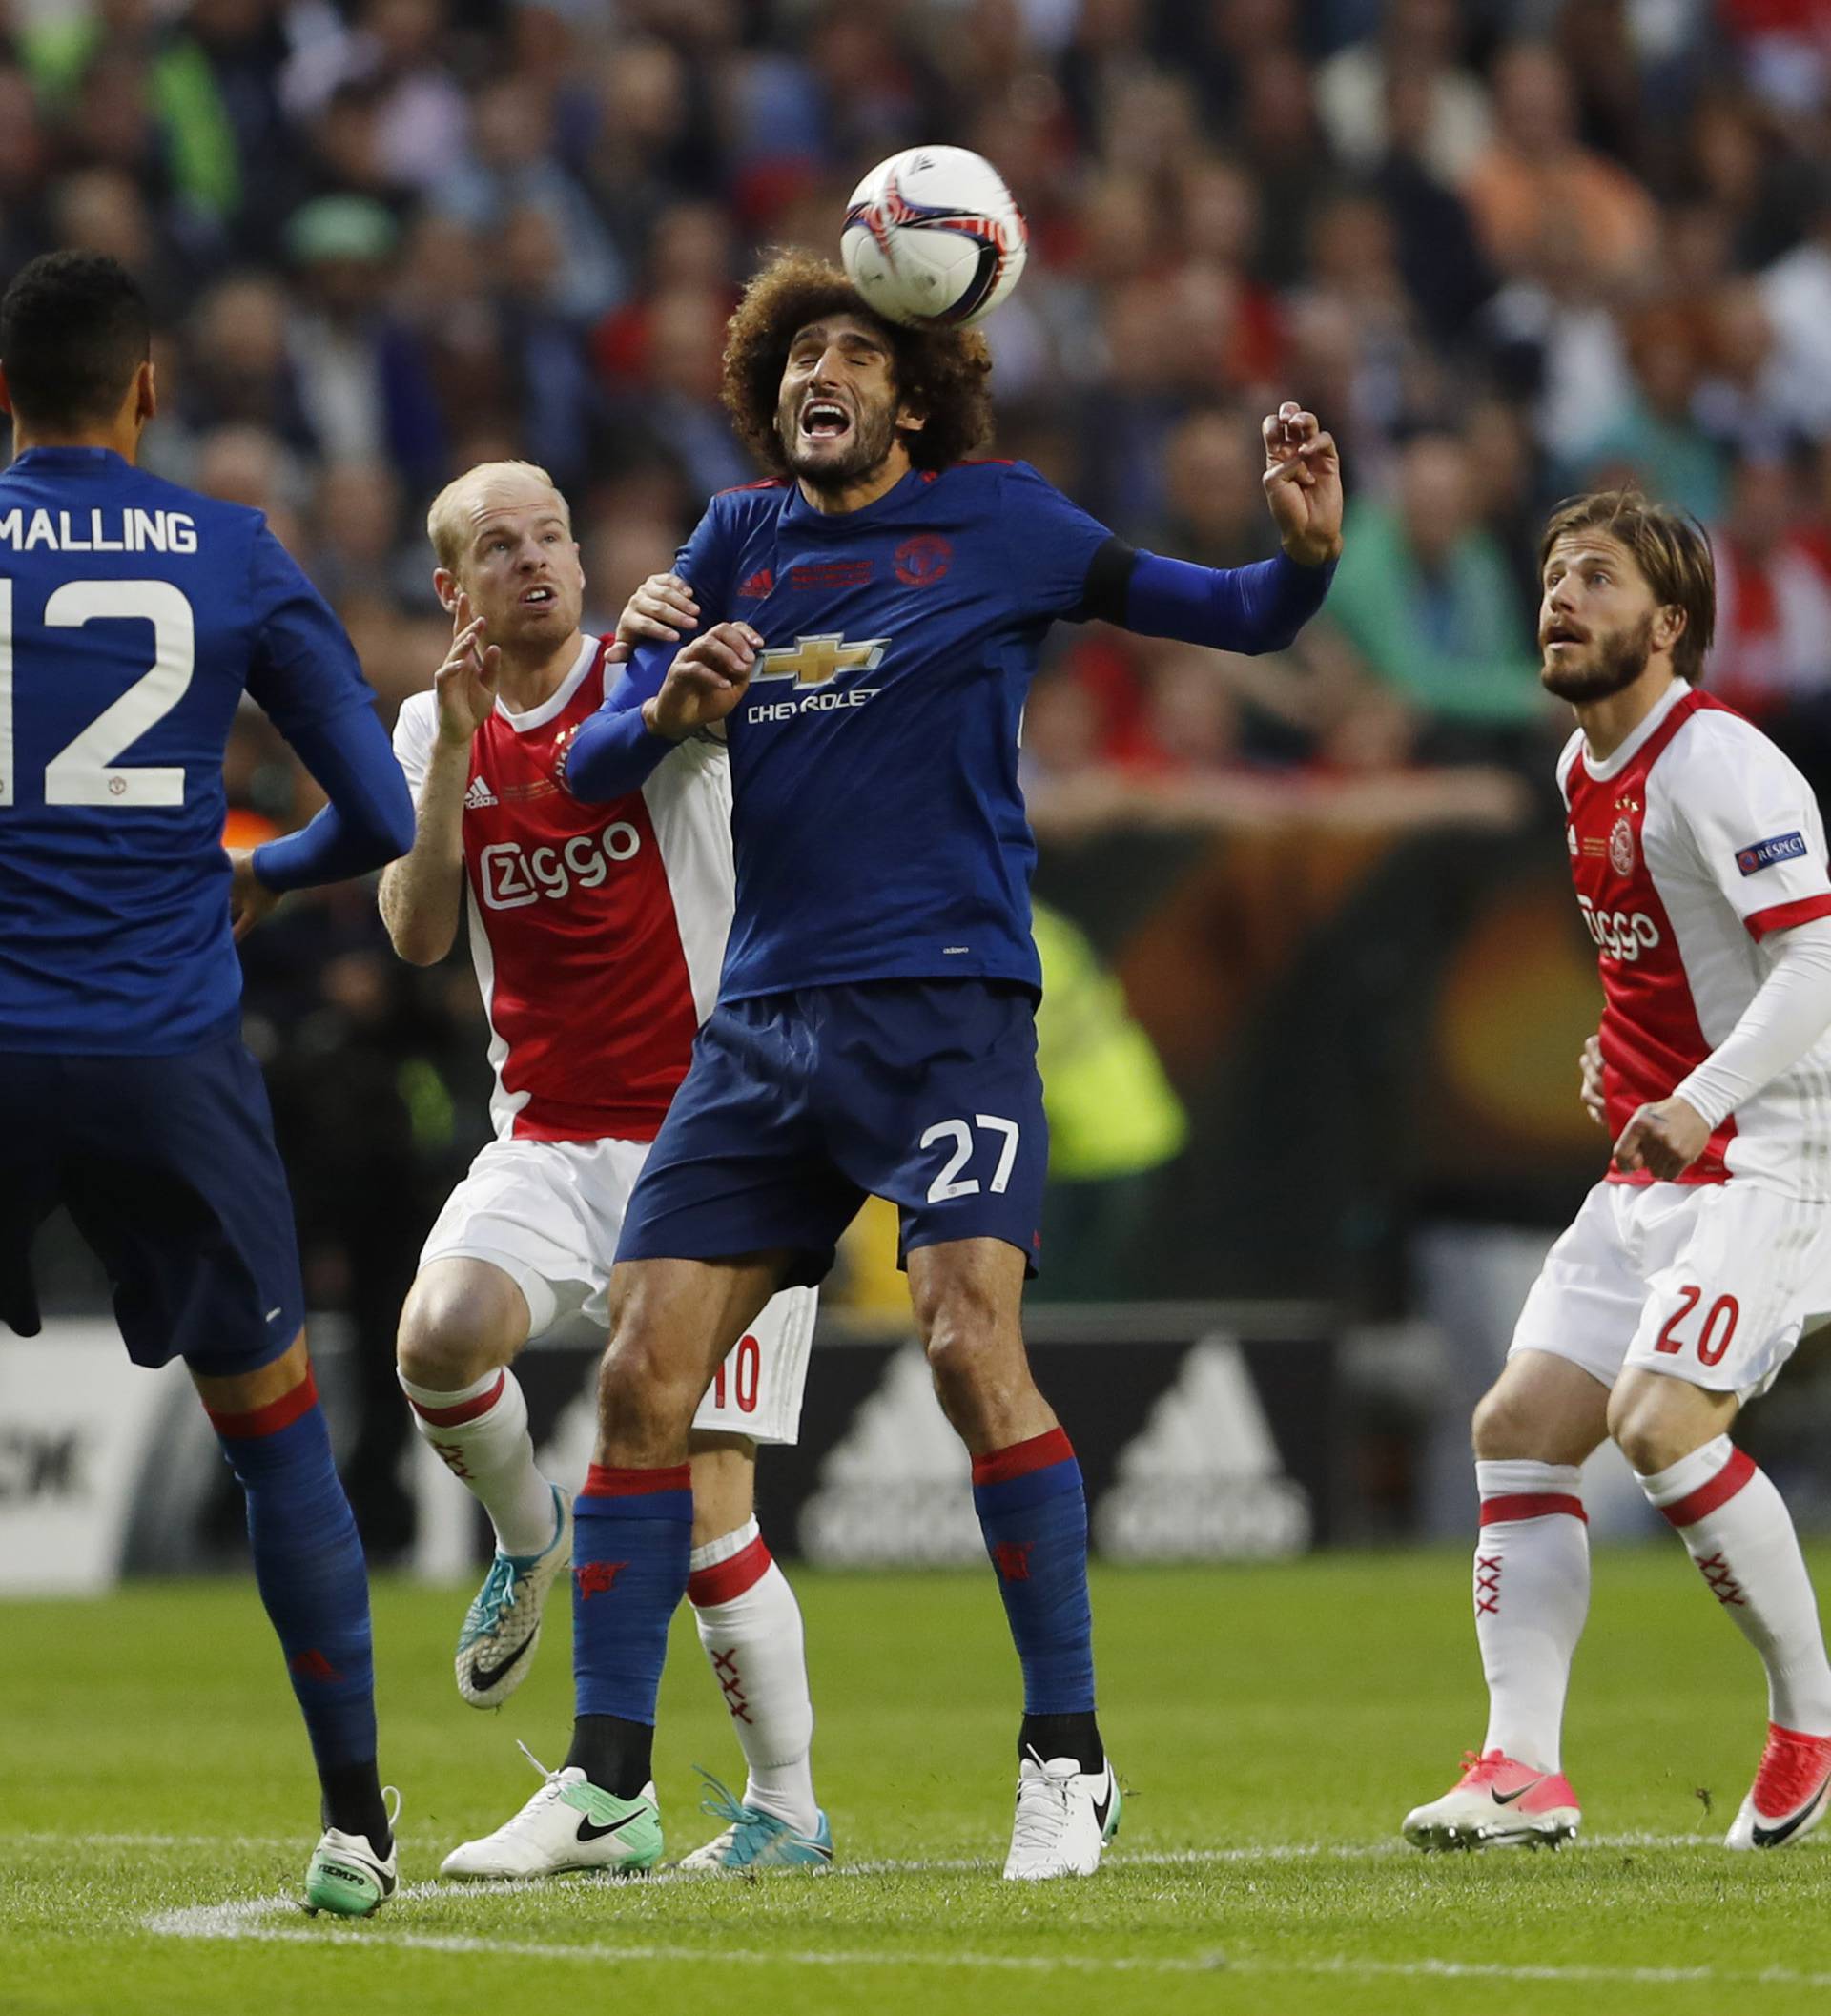 Manchester United's Marouane Fellaini in action with Ajax's Davy Klaassen